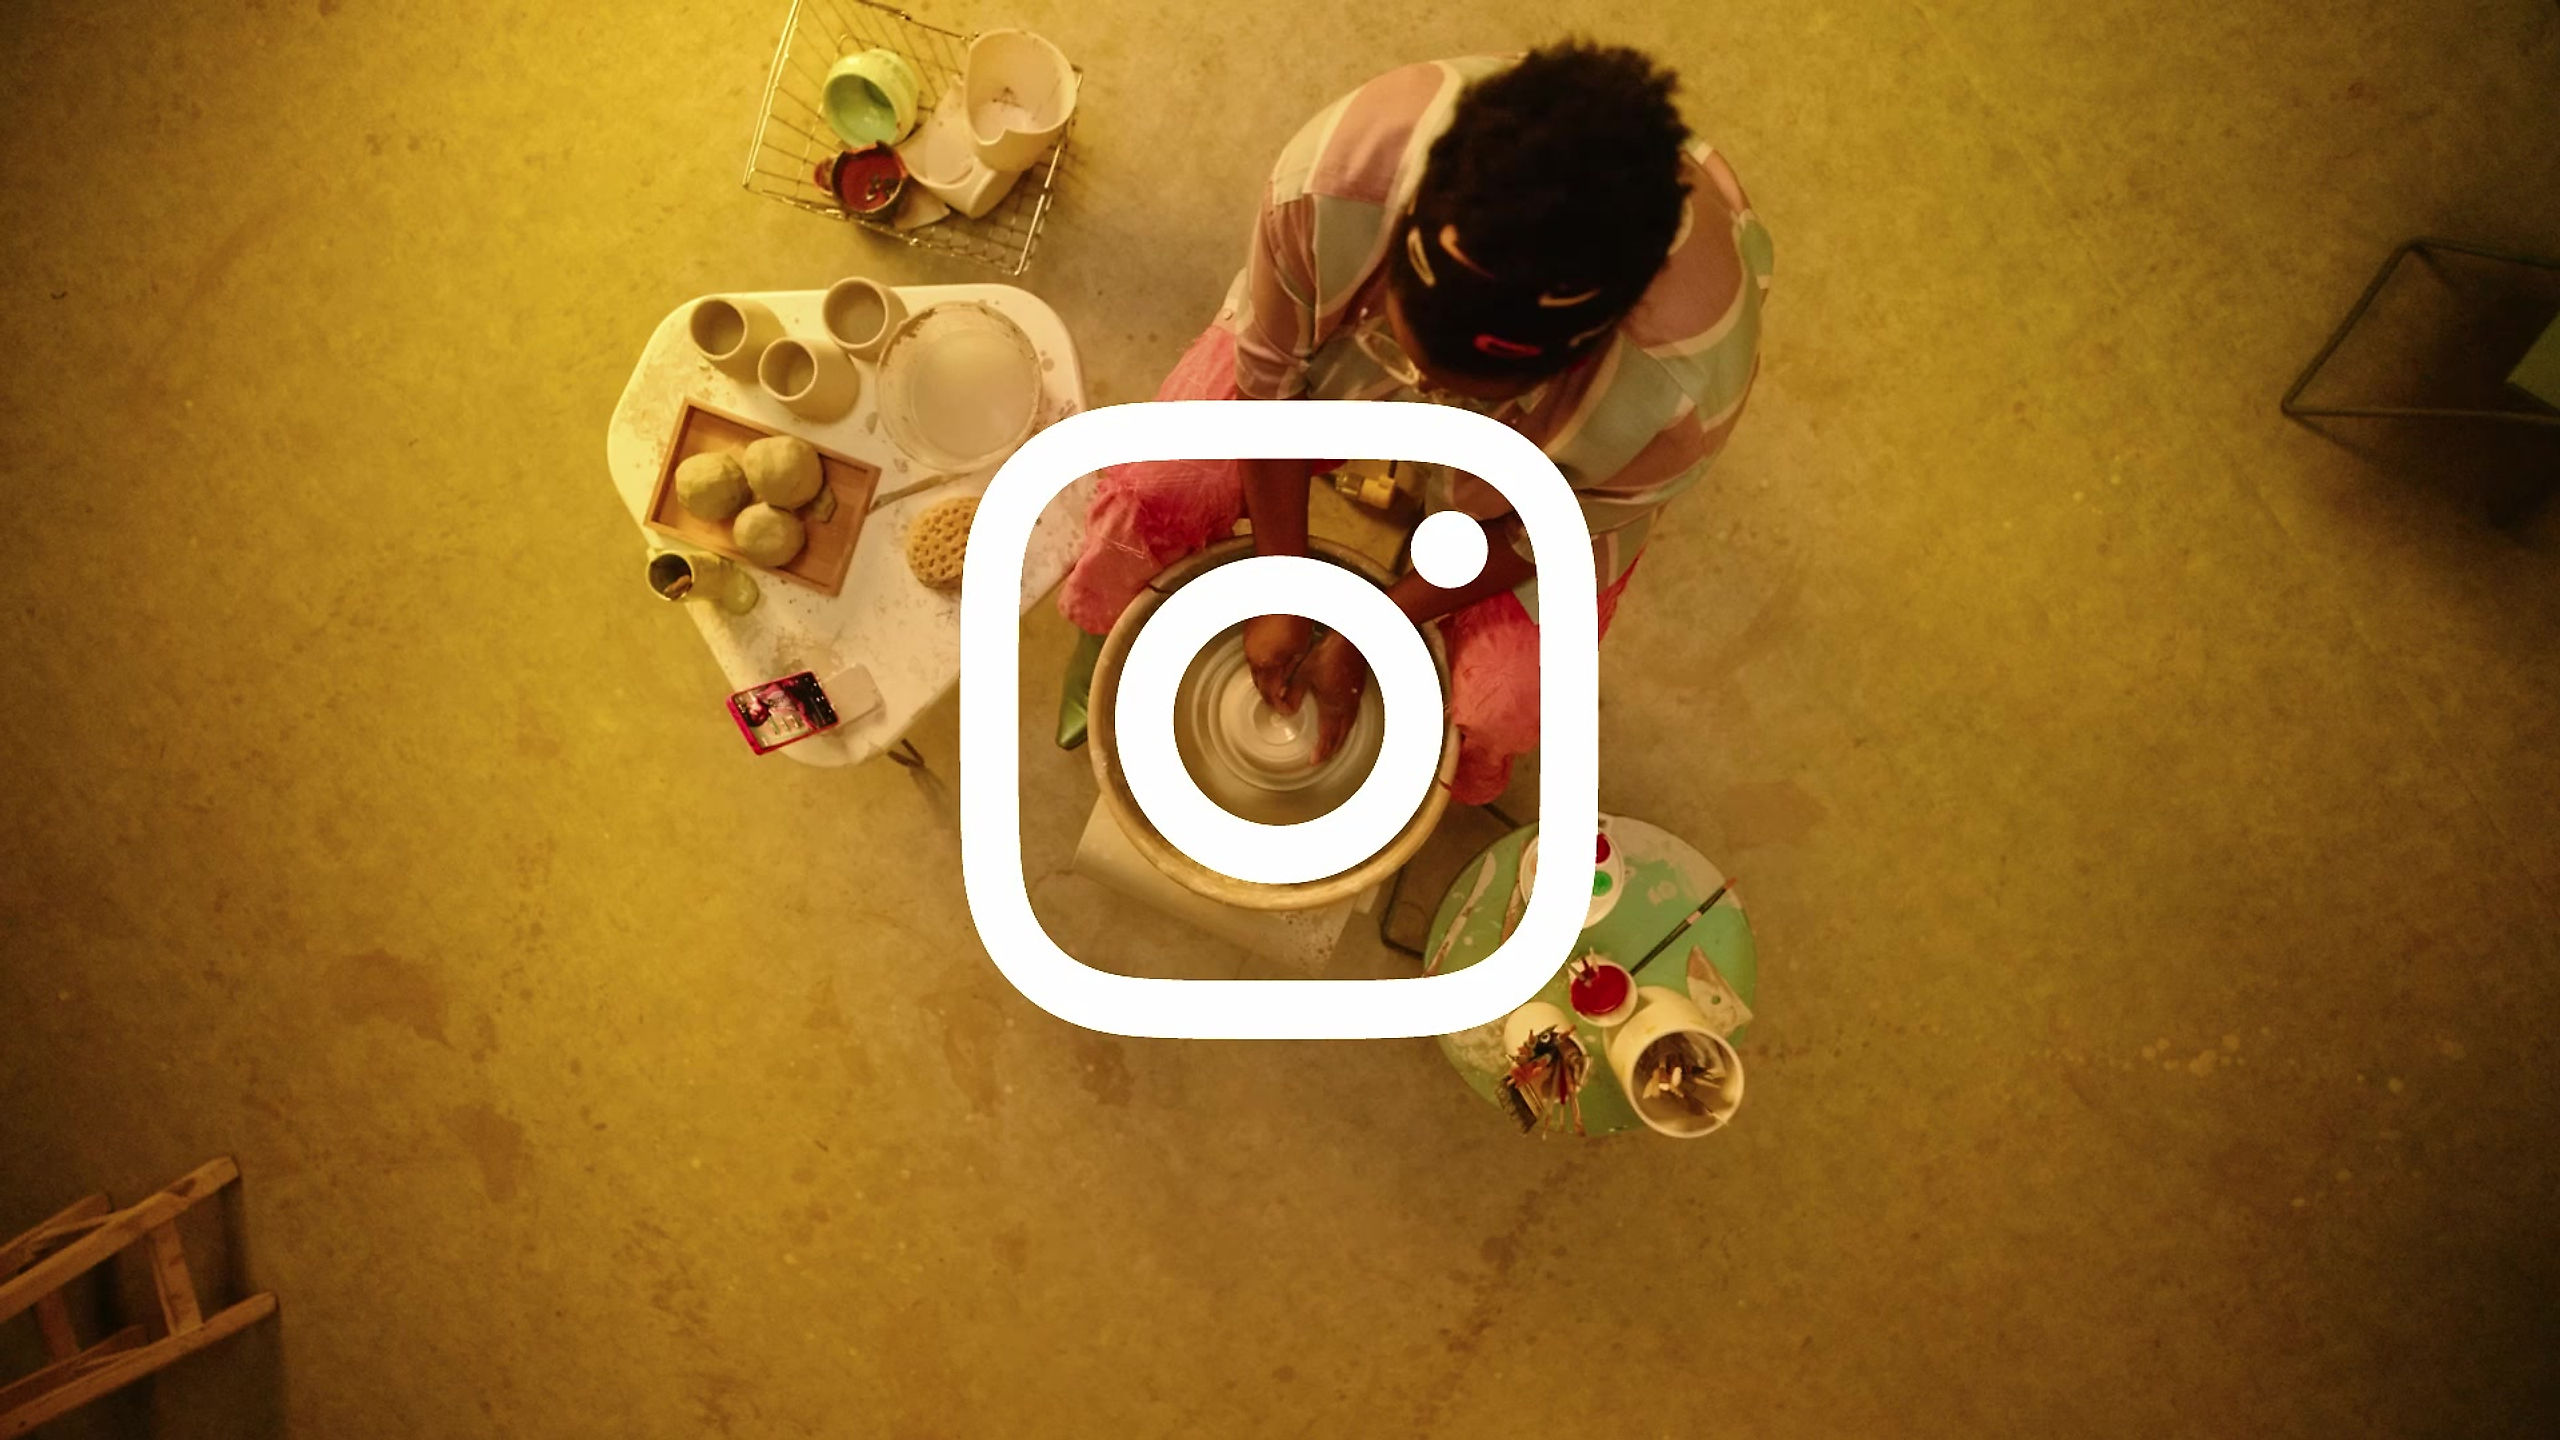 Instagram "Connecting Creativity"